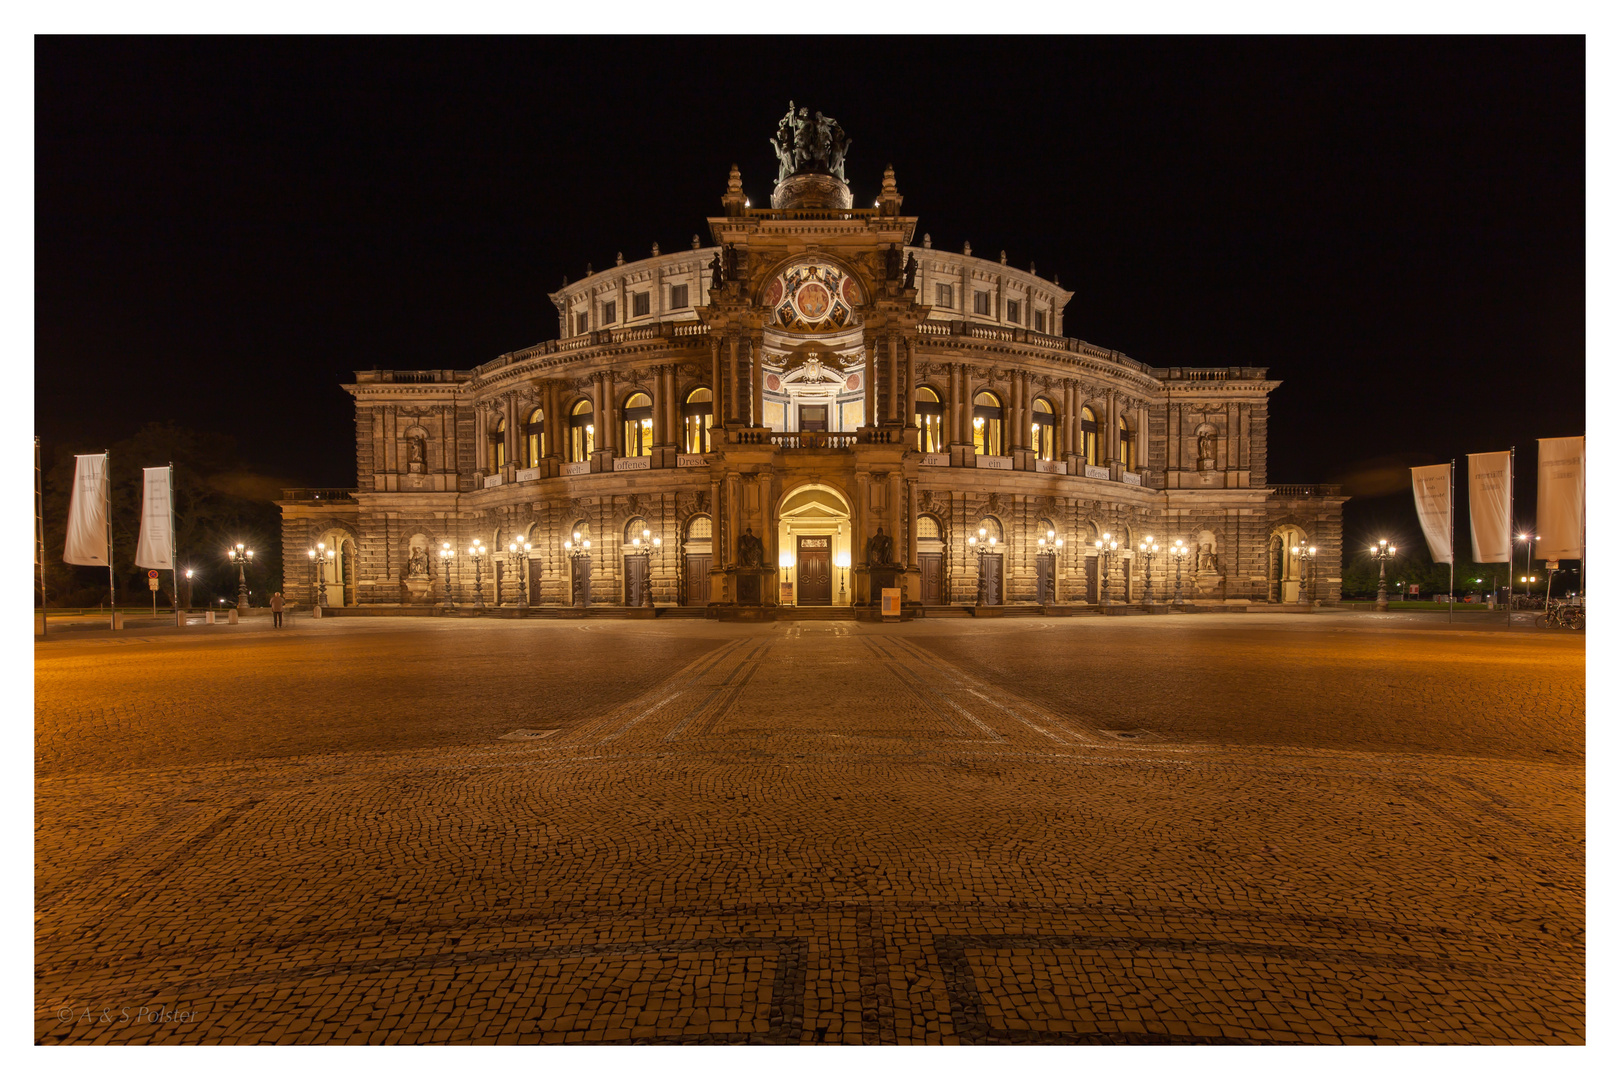 Semper Oper Dresden